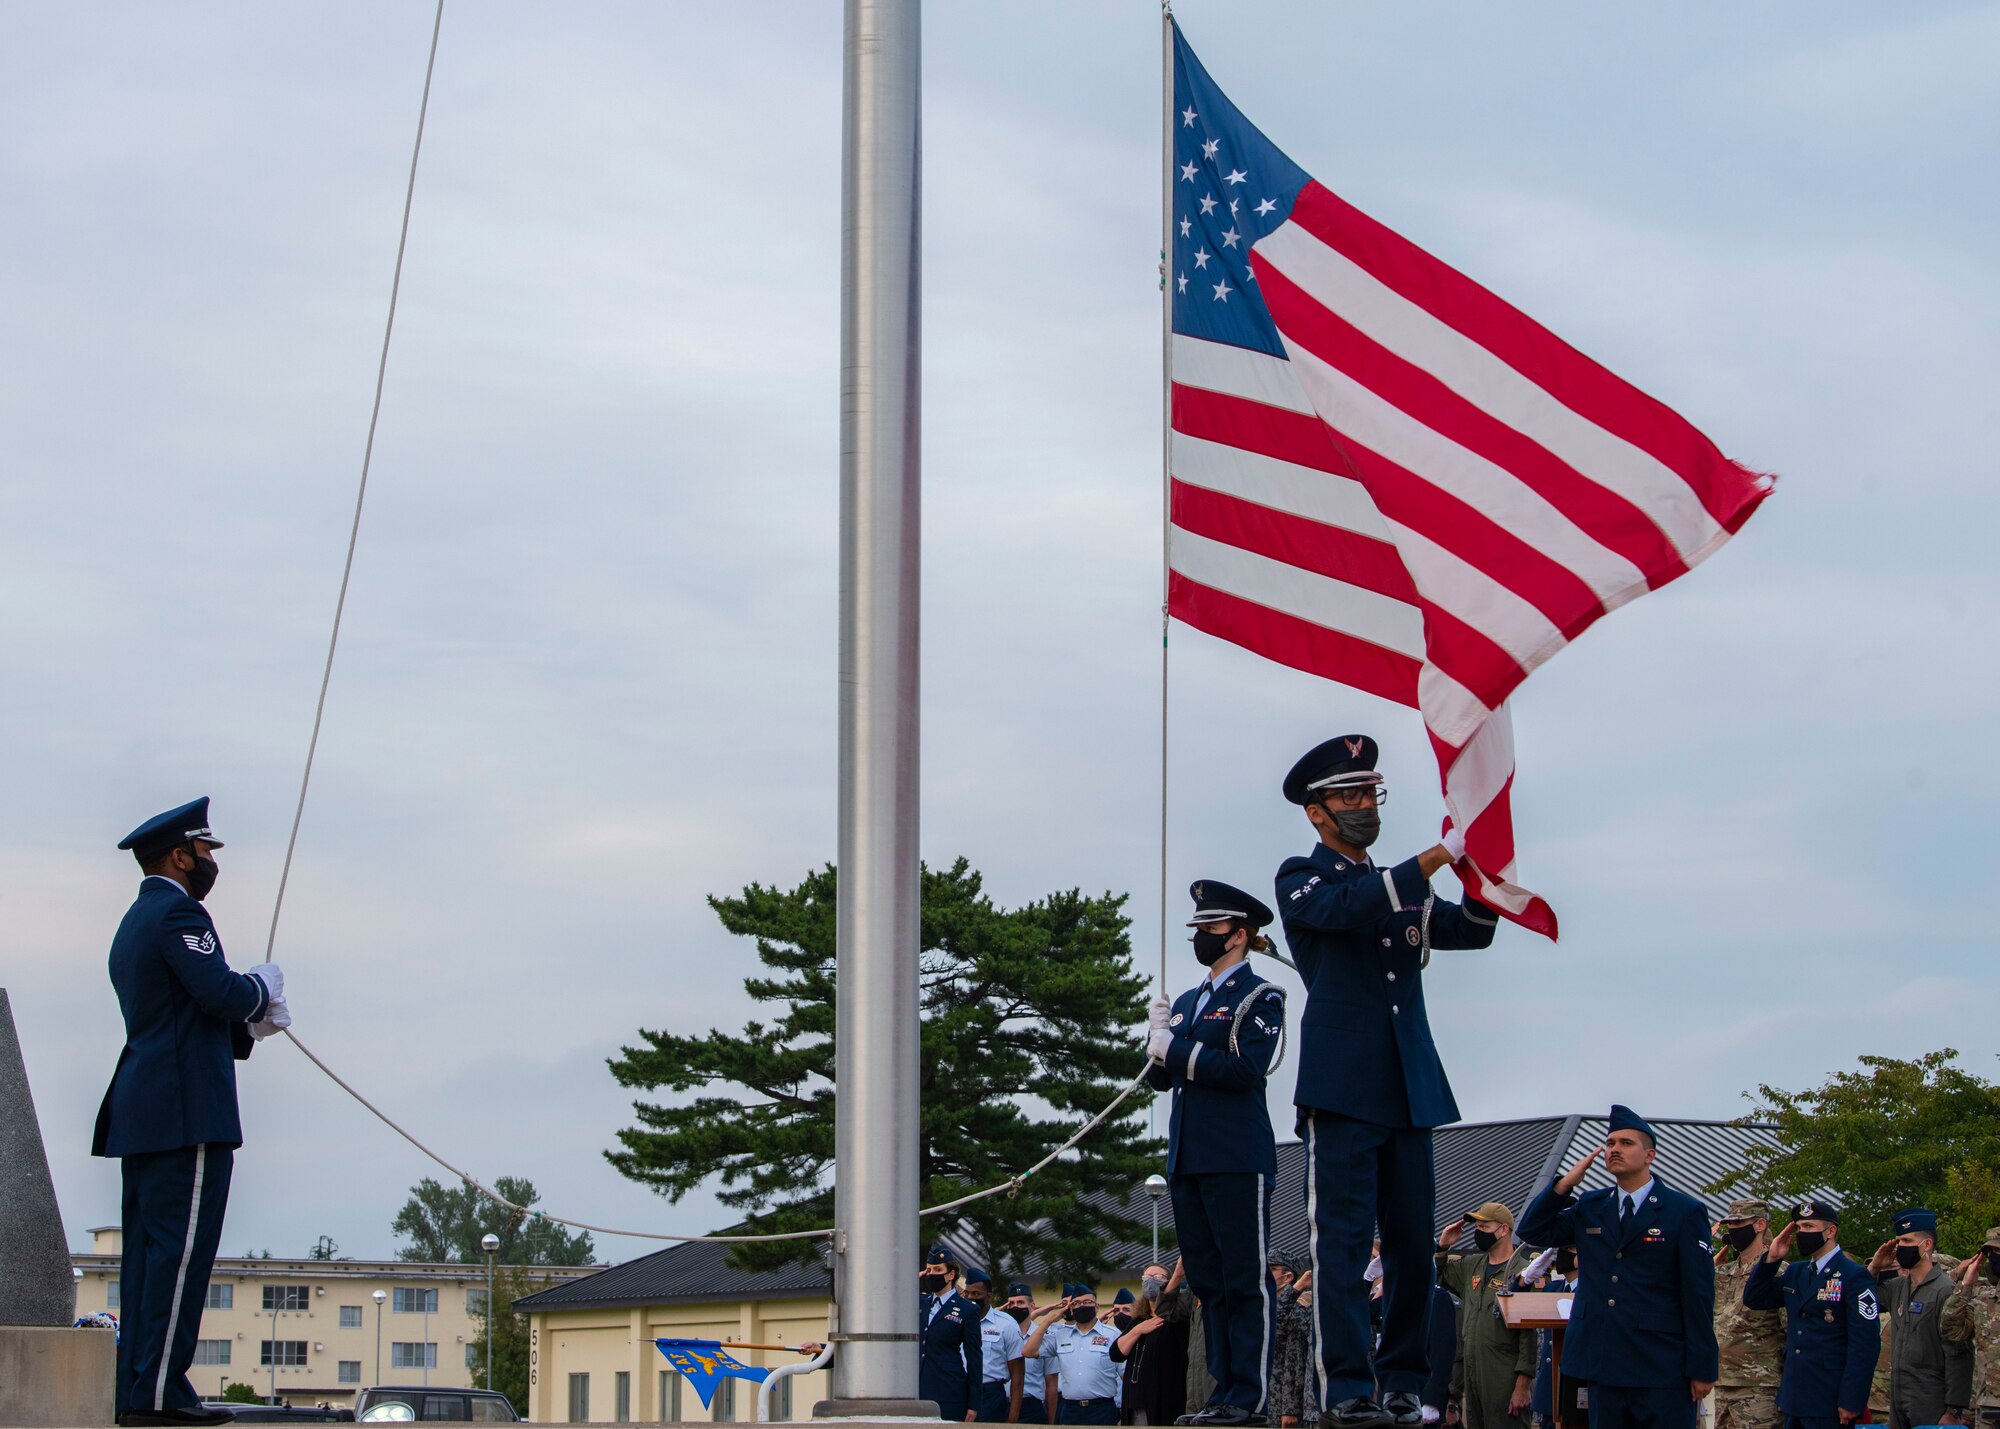 Military members in uniform lower an American flag.